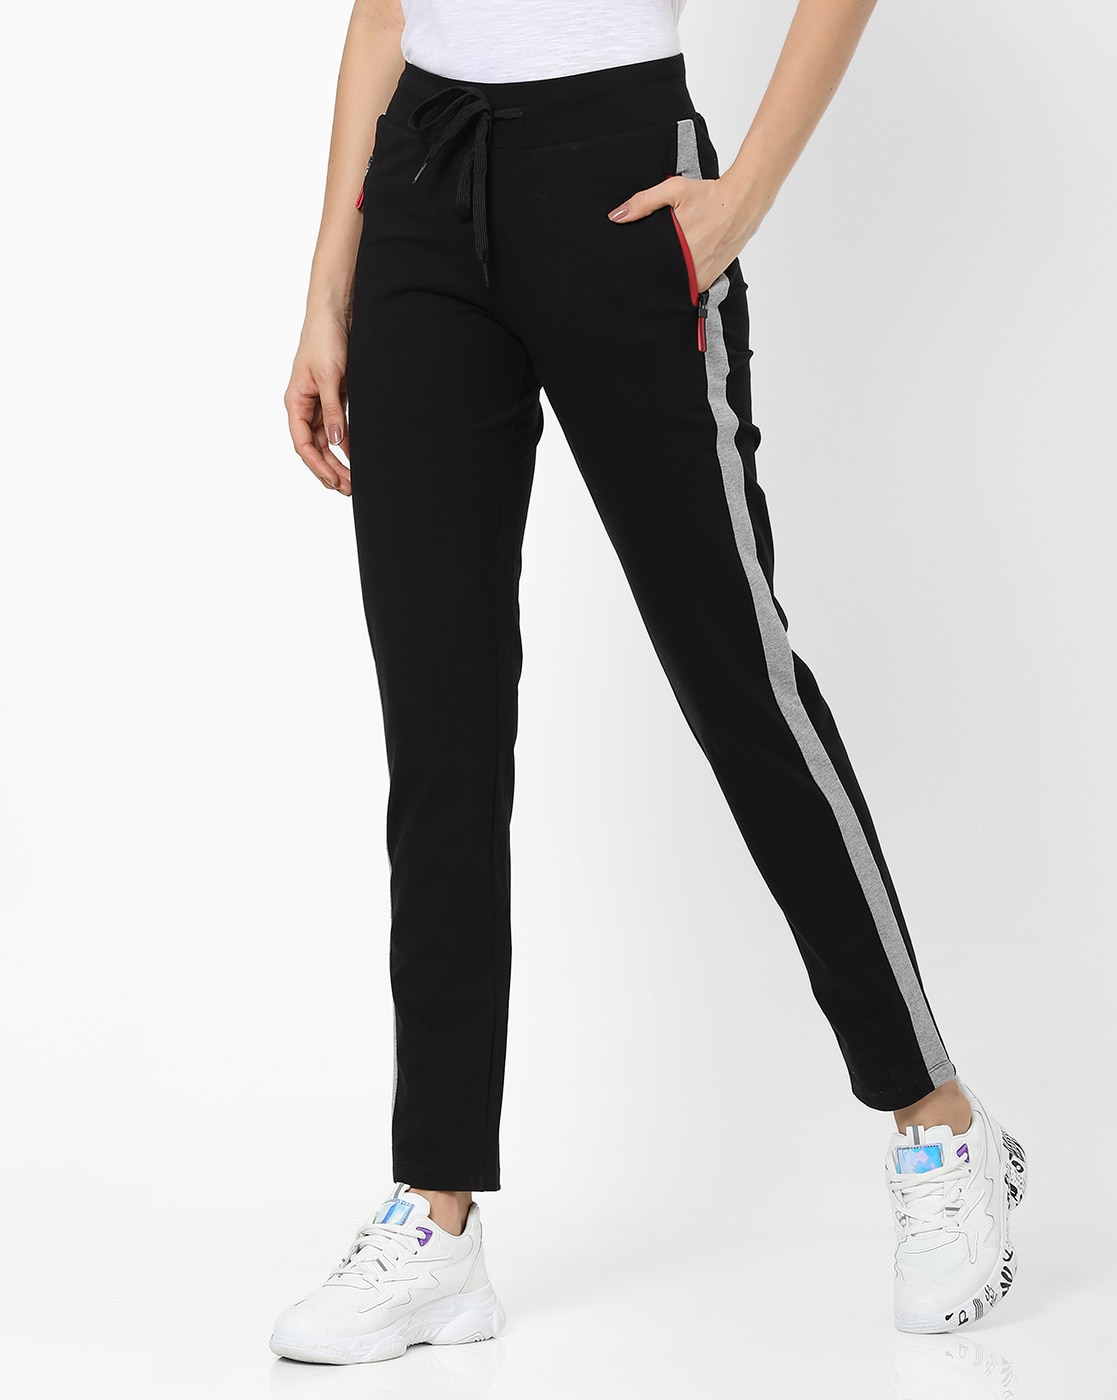 Buy Green Track Pants for Women by Teamspirit Online | Ajio.com